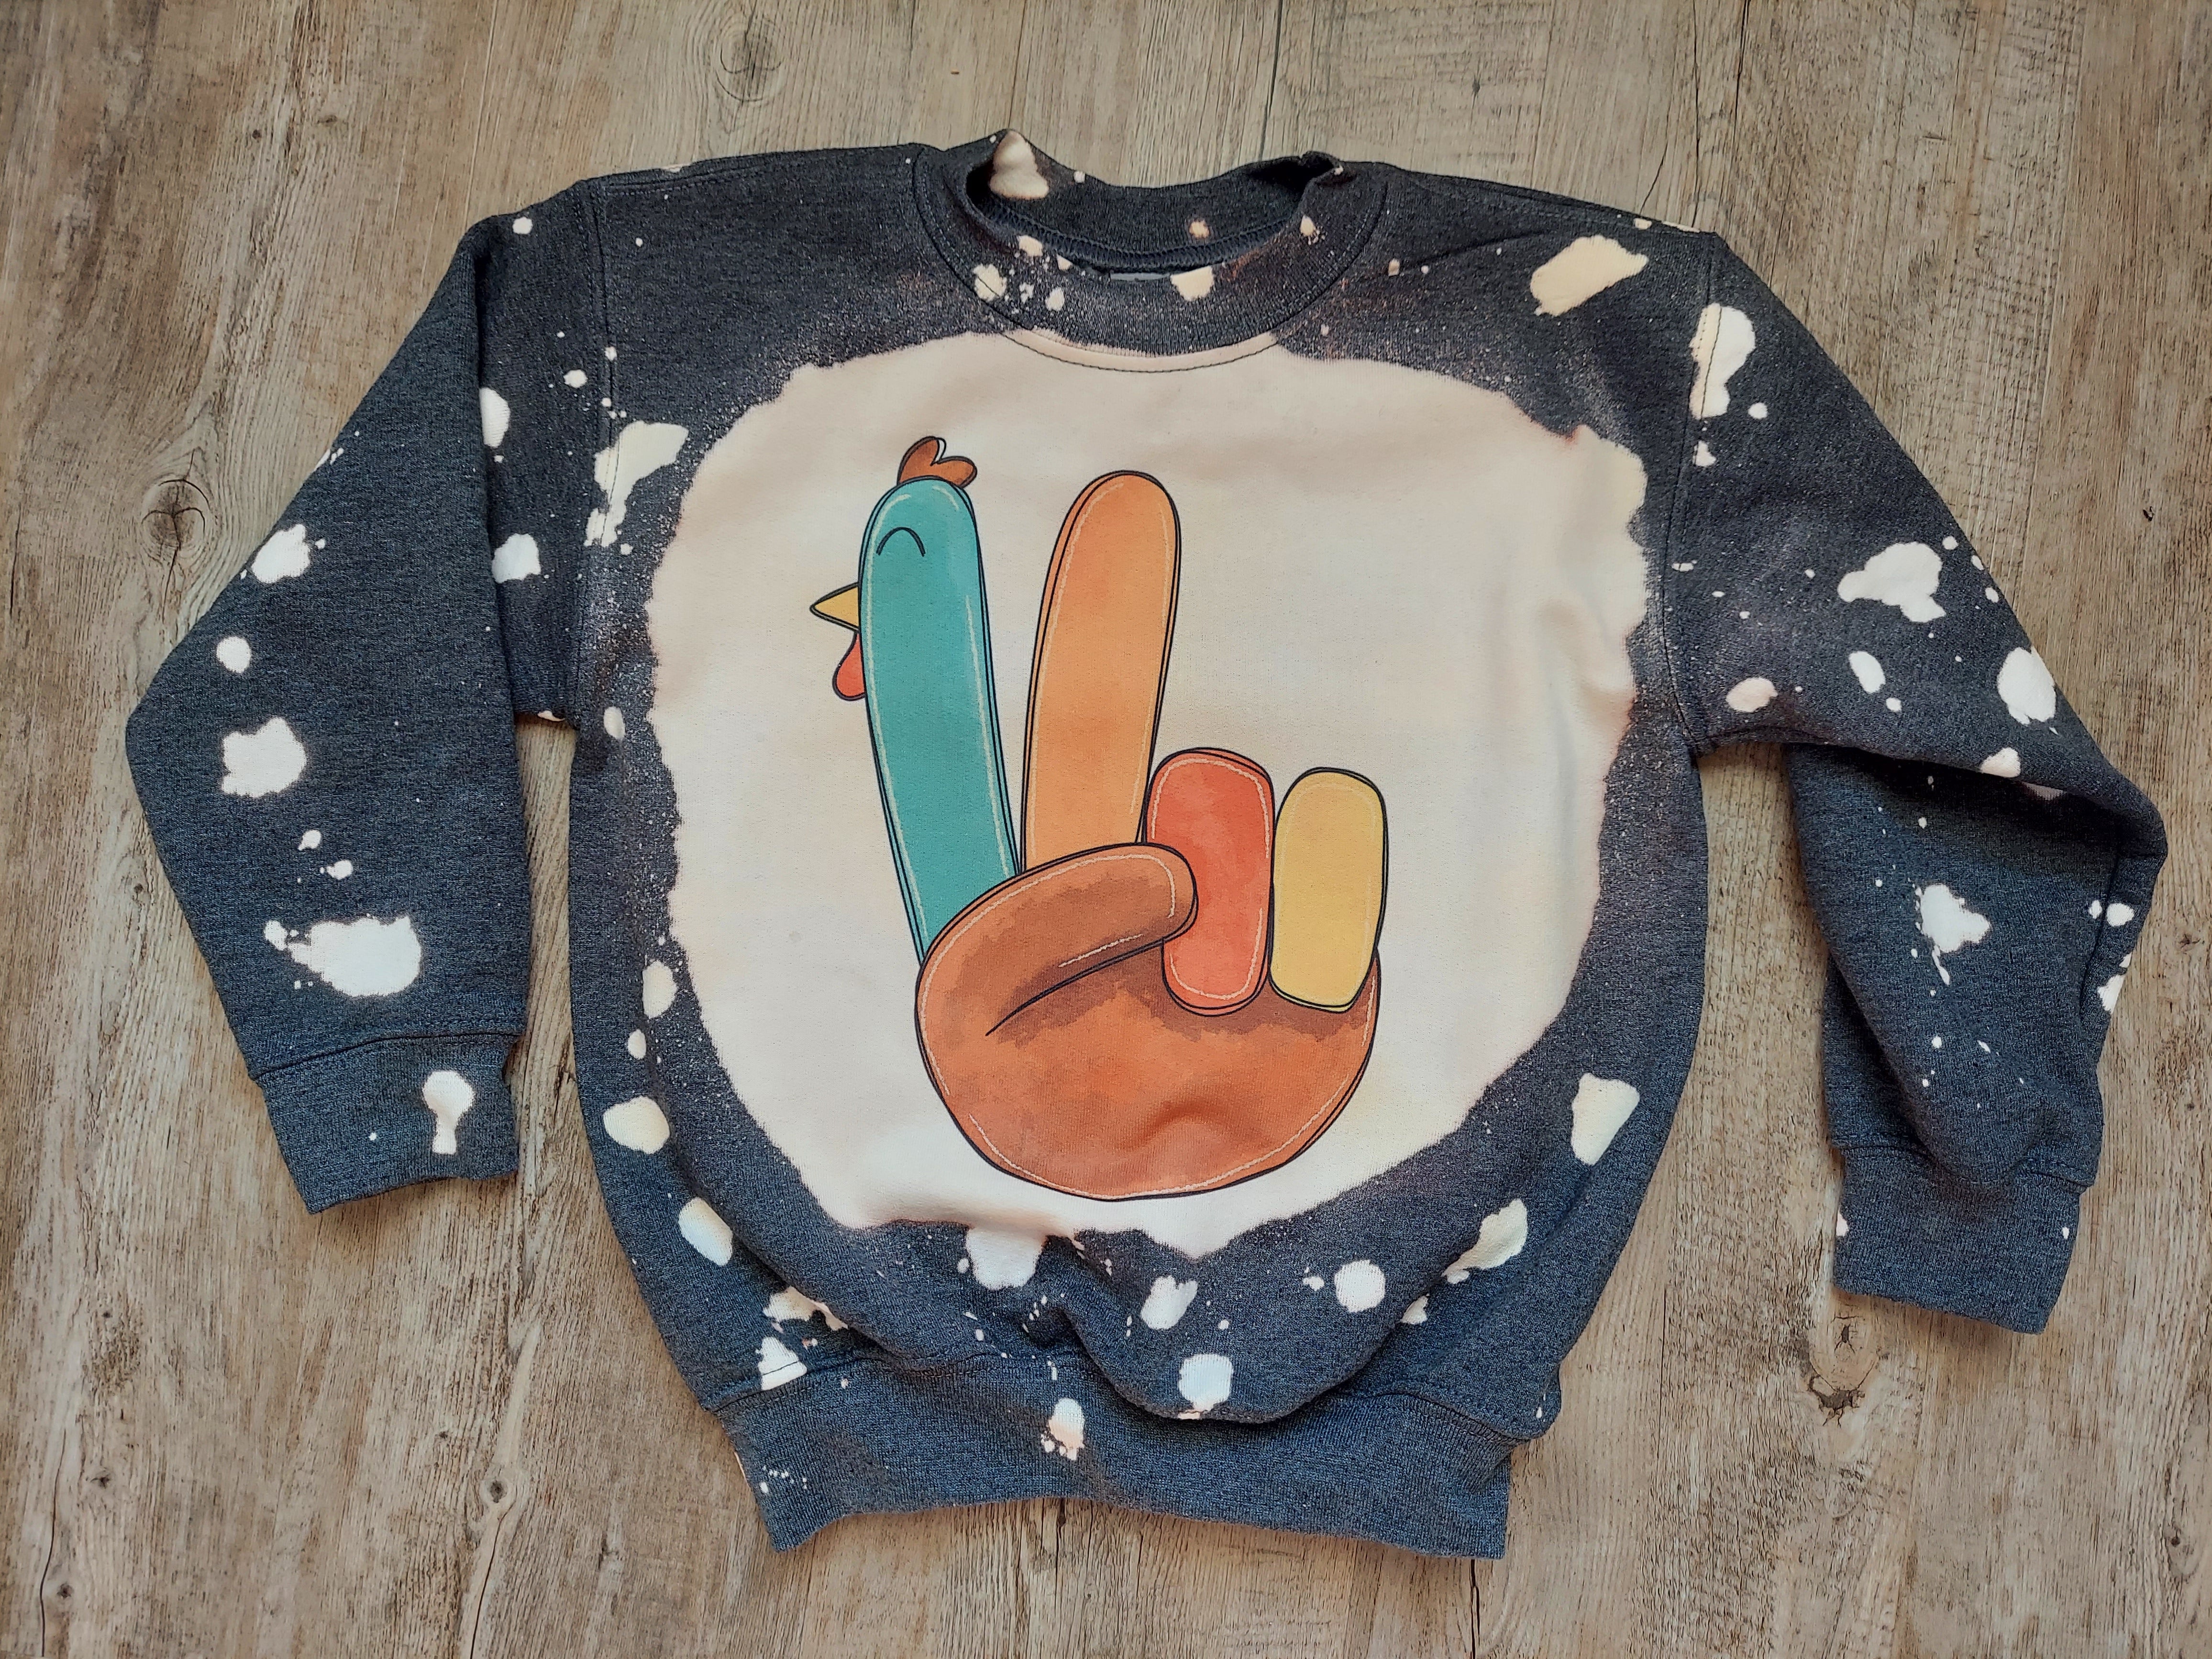 Turkey Sweatshirt